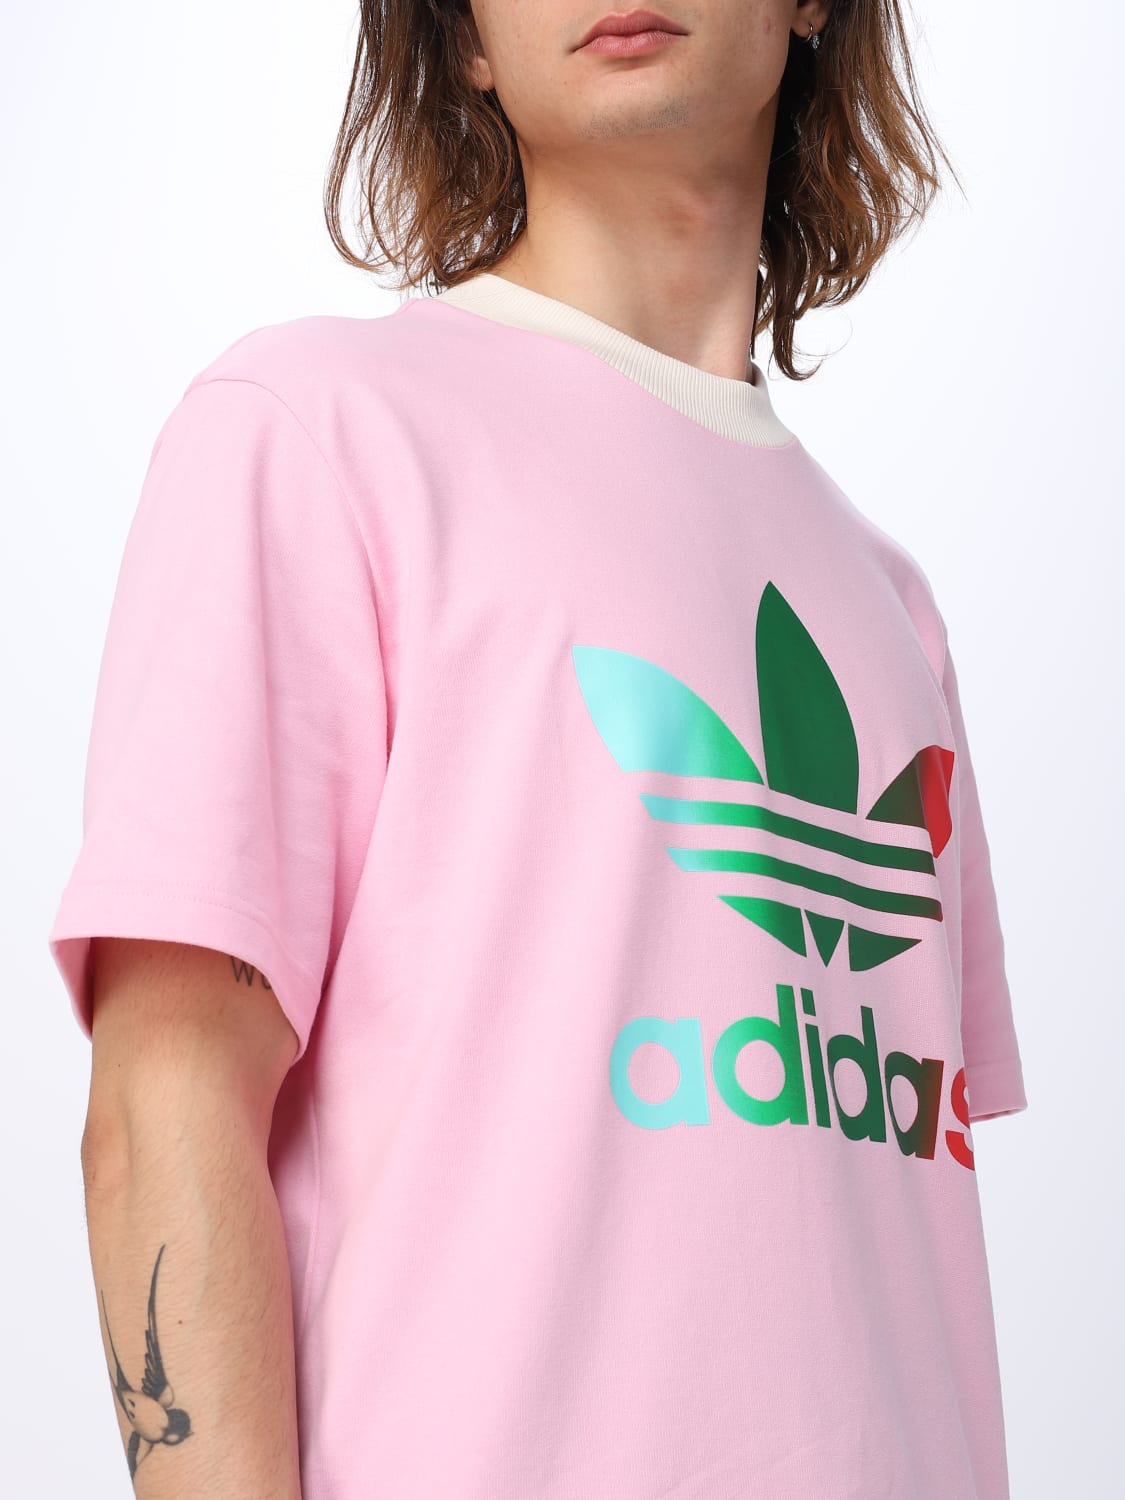 Adidas Originals Outlet: T-shirt homme - Rose